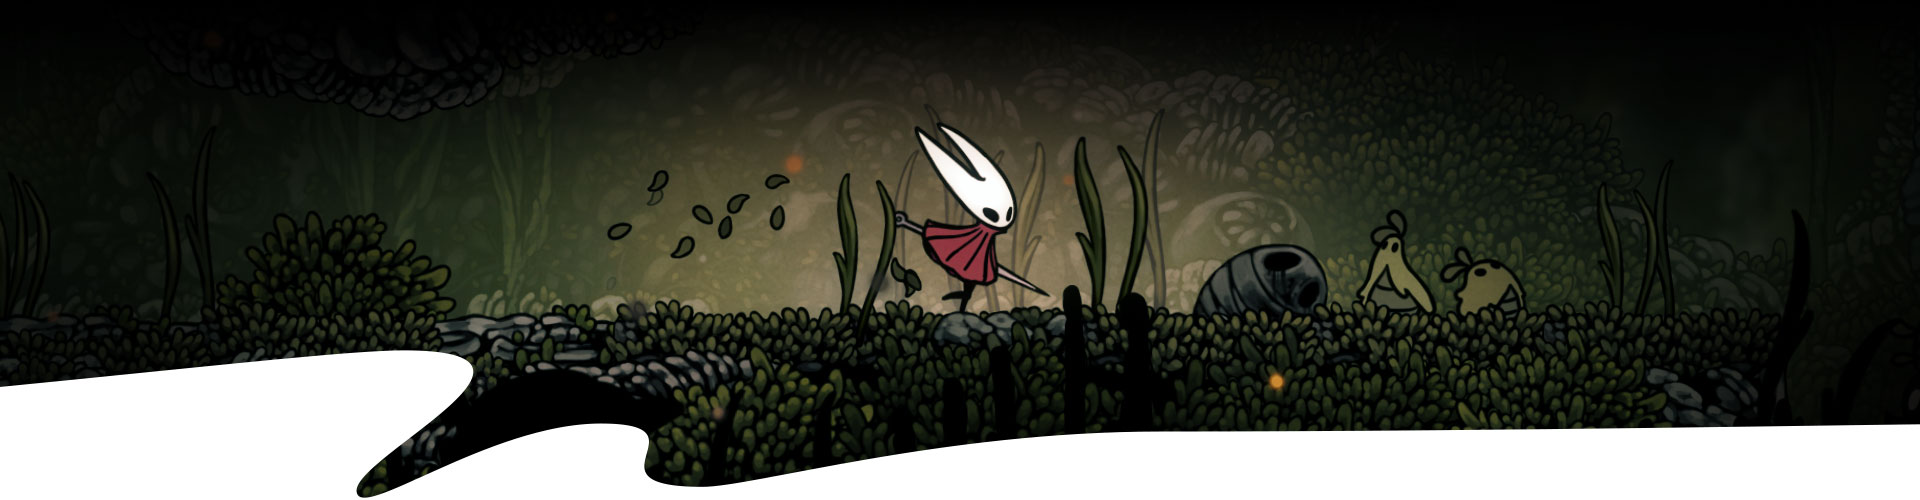 Un personaje camina por un bosque ventoso. 